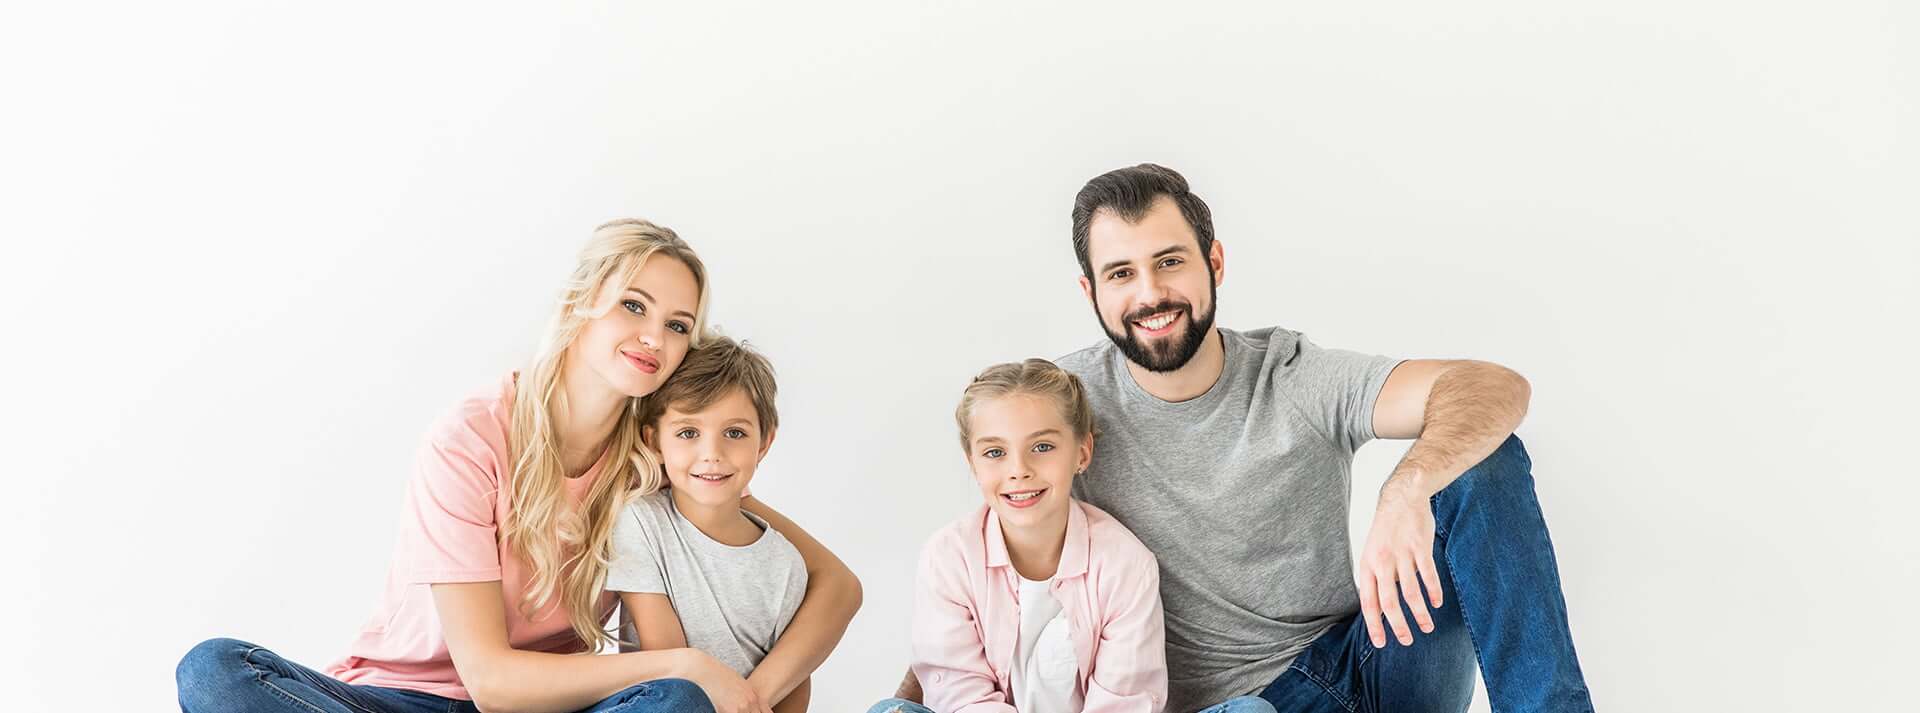 Smiling family on white background